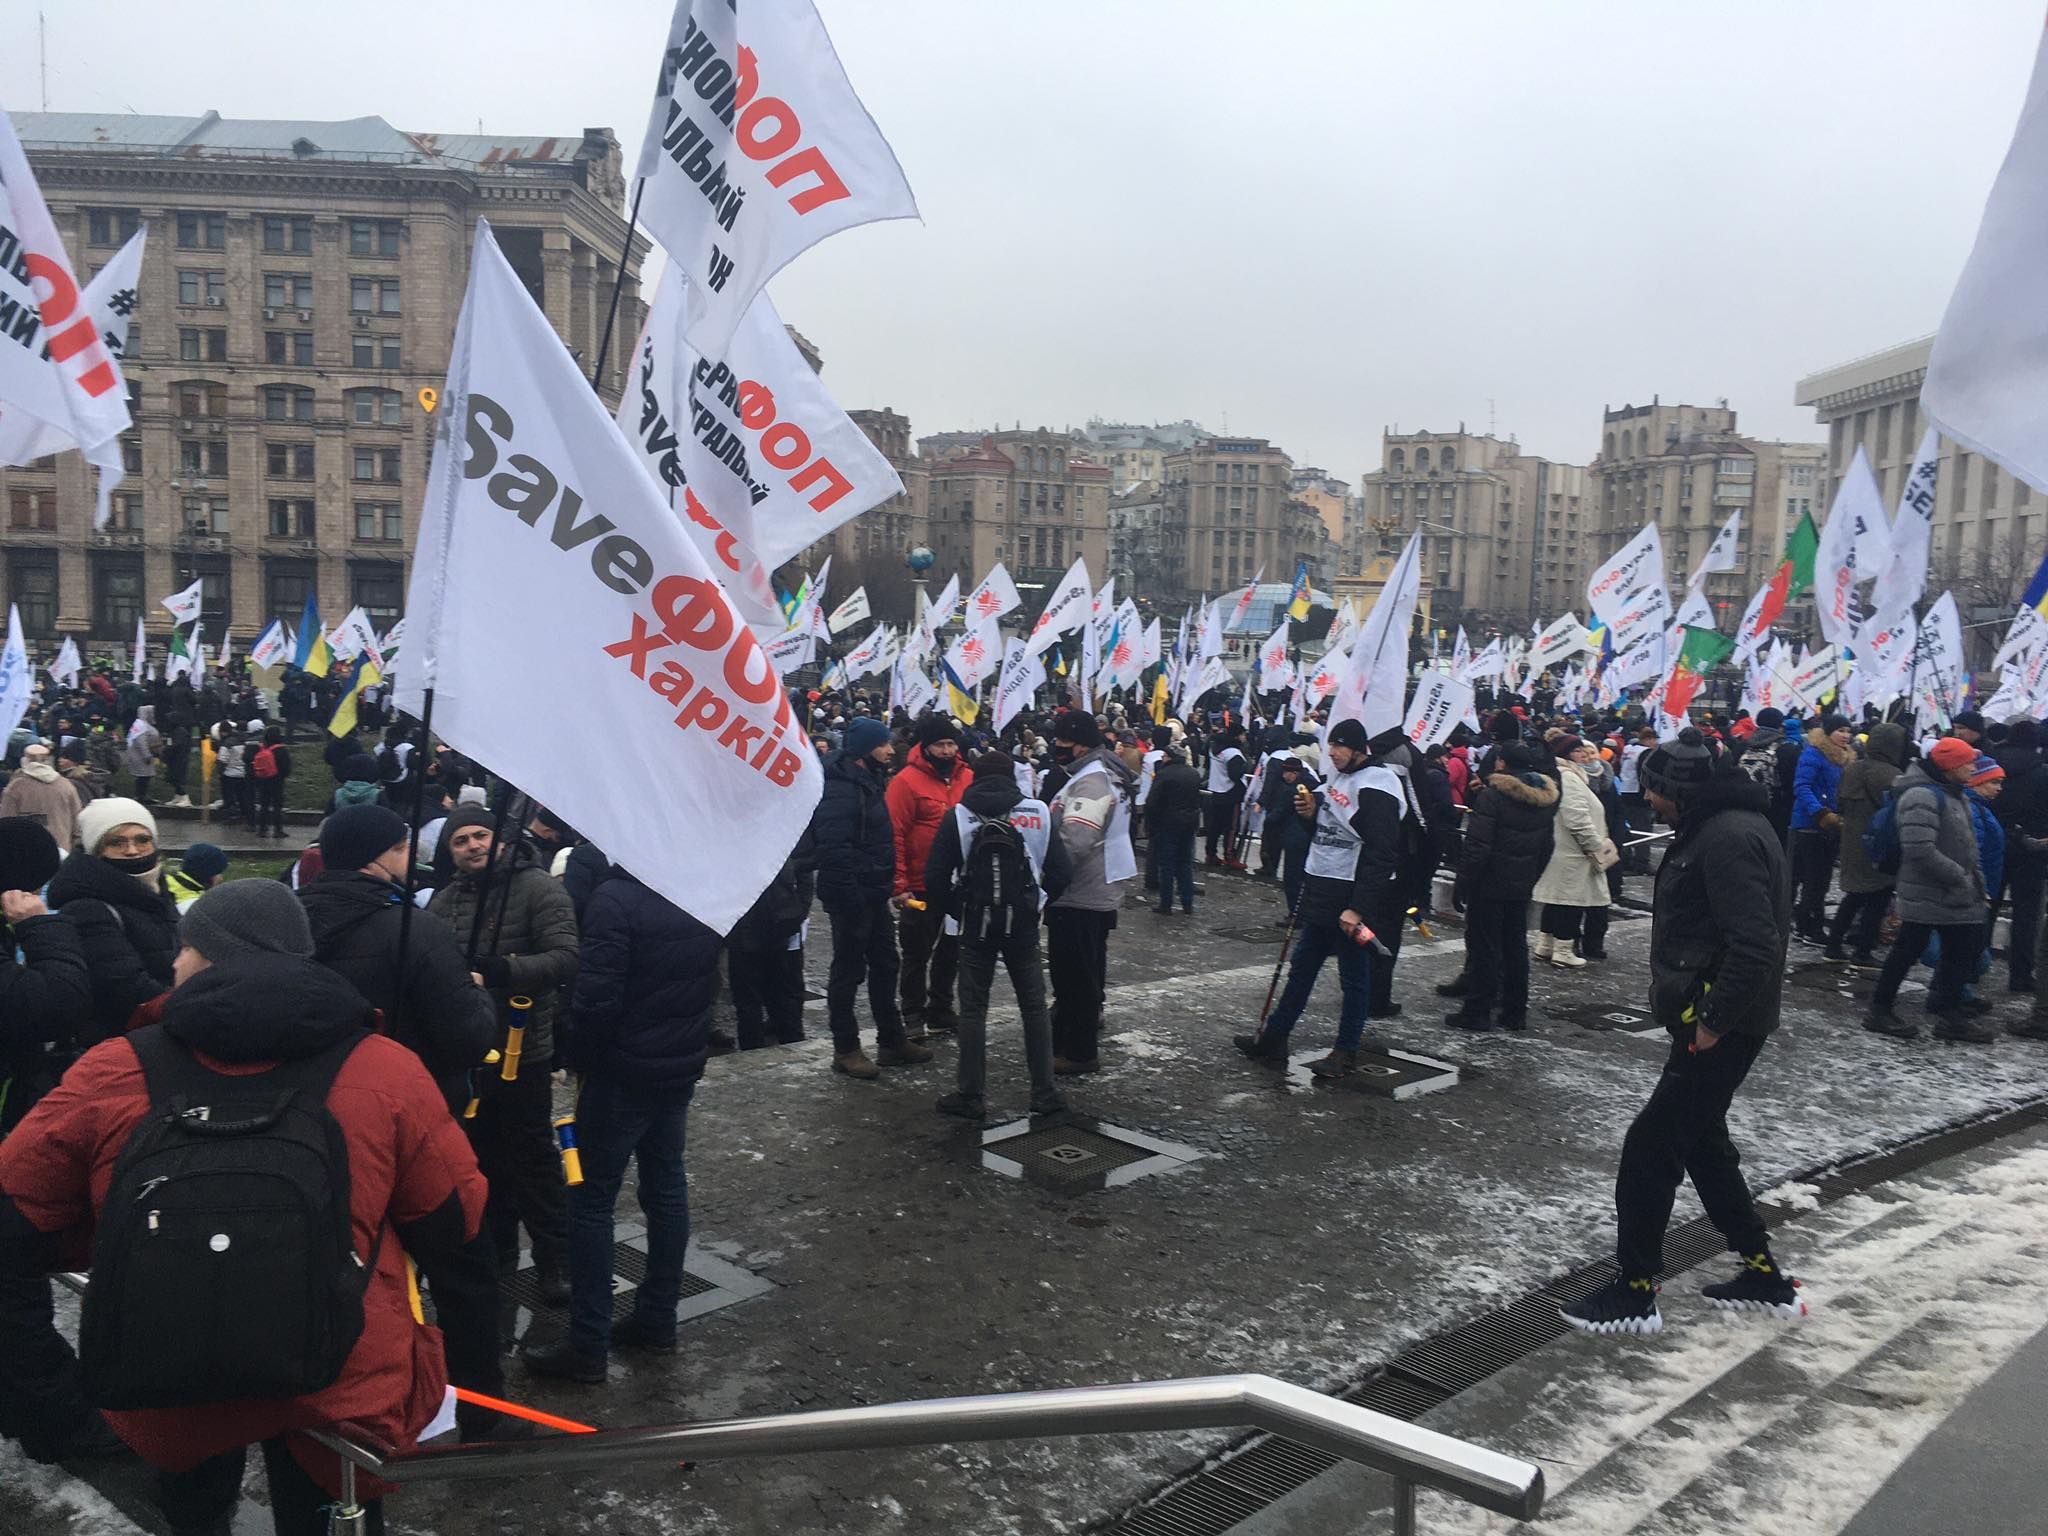 ФЛП протестуют - как власти решить проблему - Новости